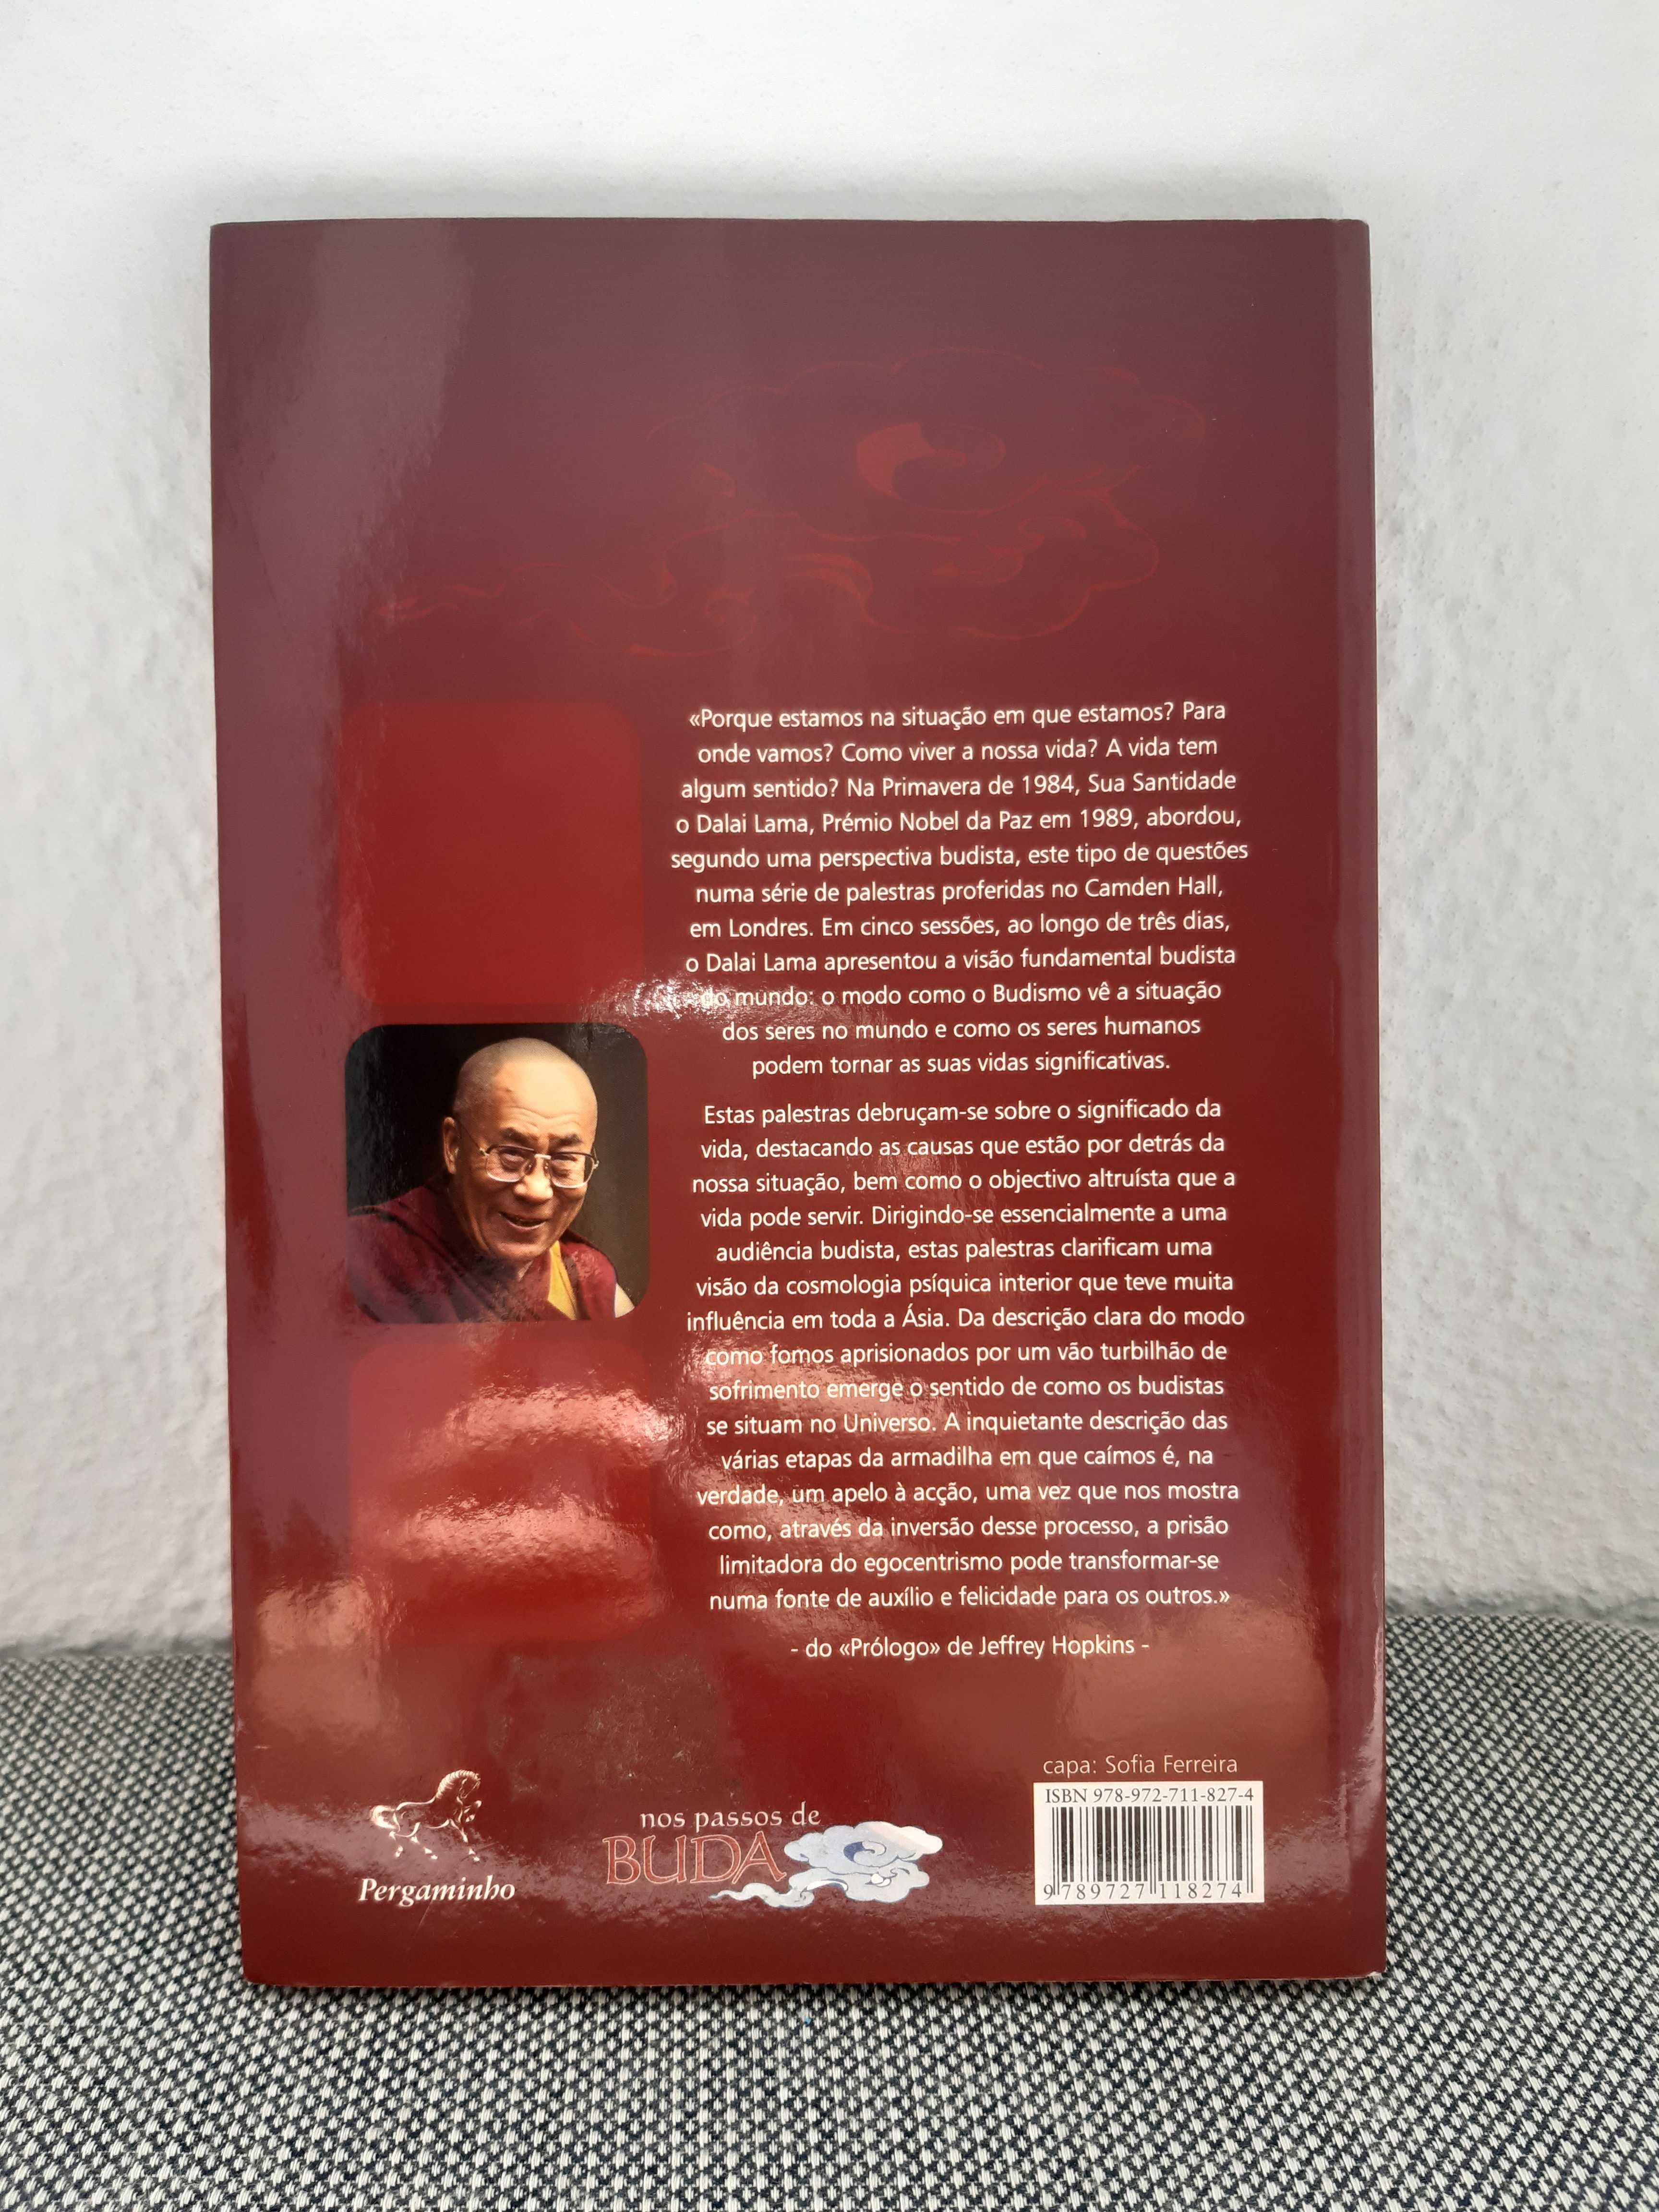 Livro "O sentido da Vida" de Dalai Lama